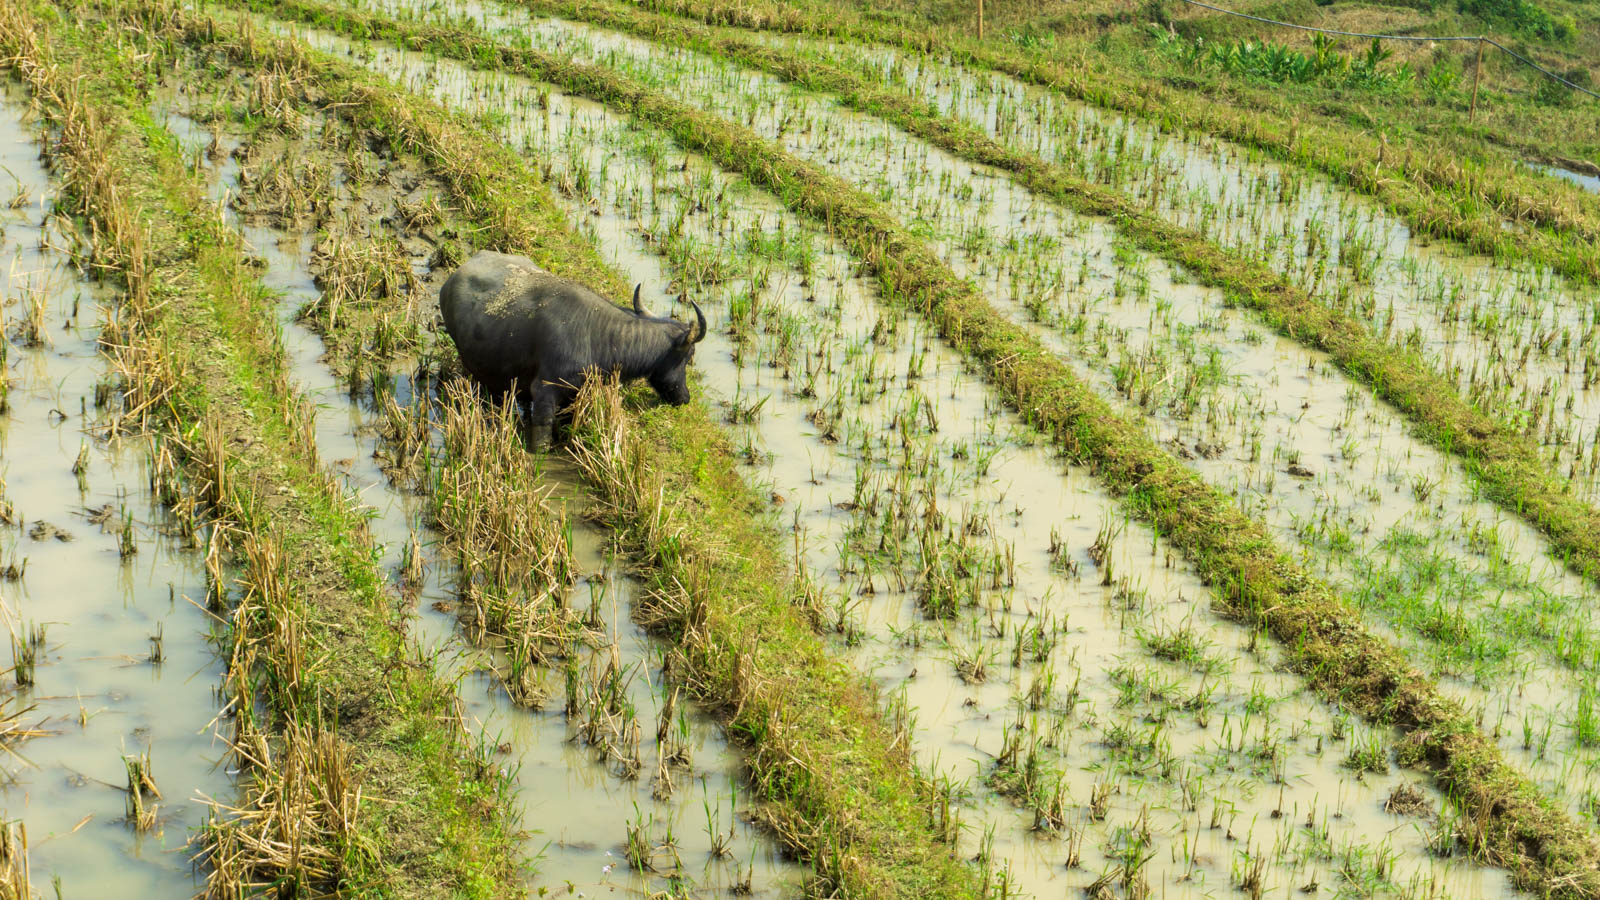 Bull in the paddy fields